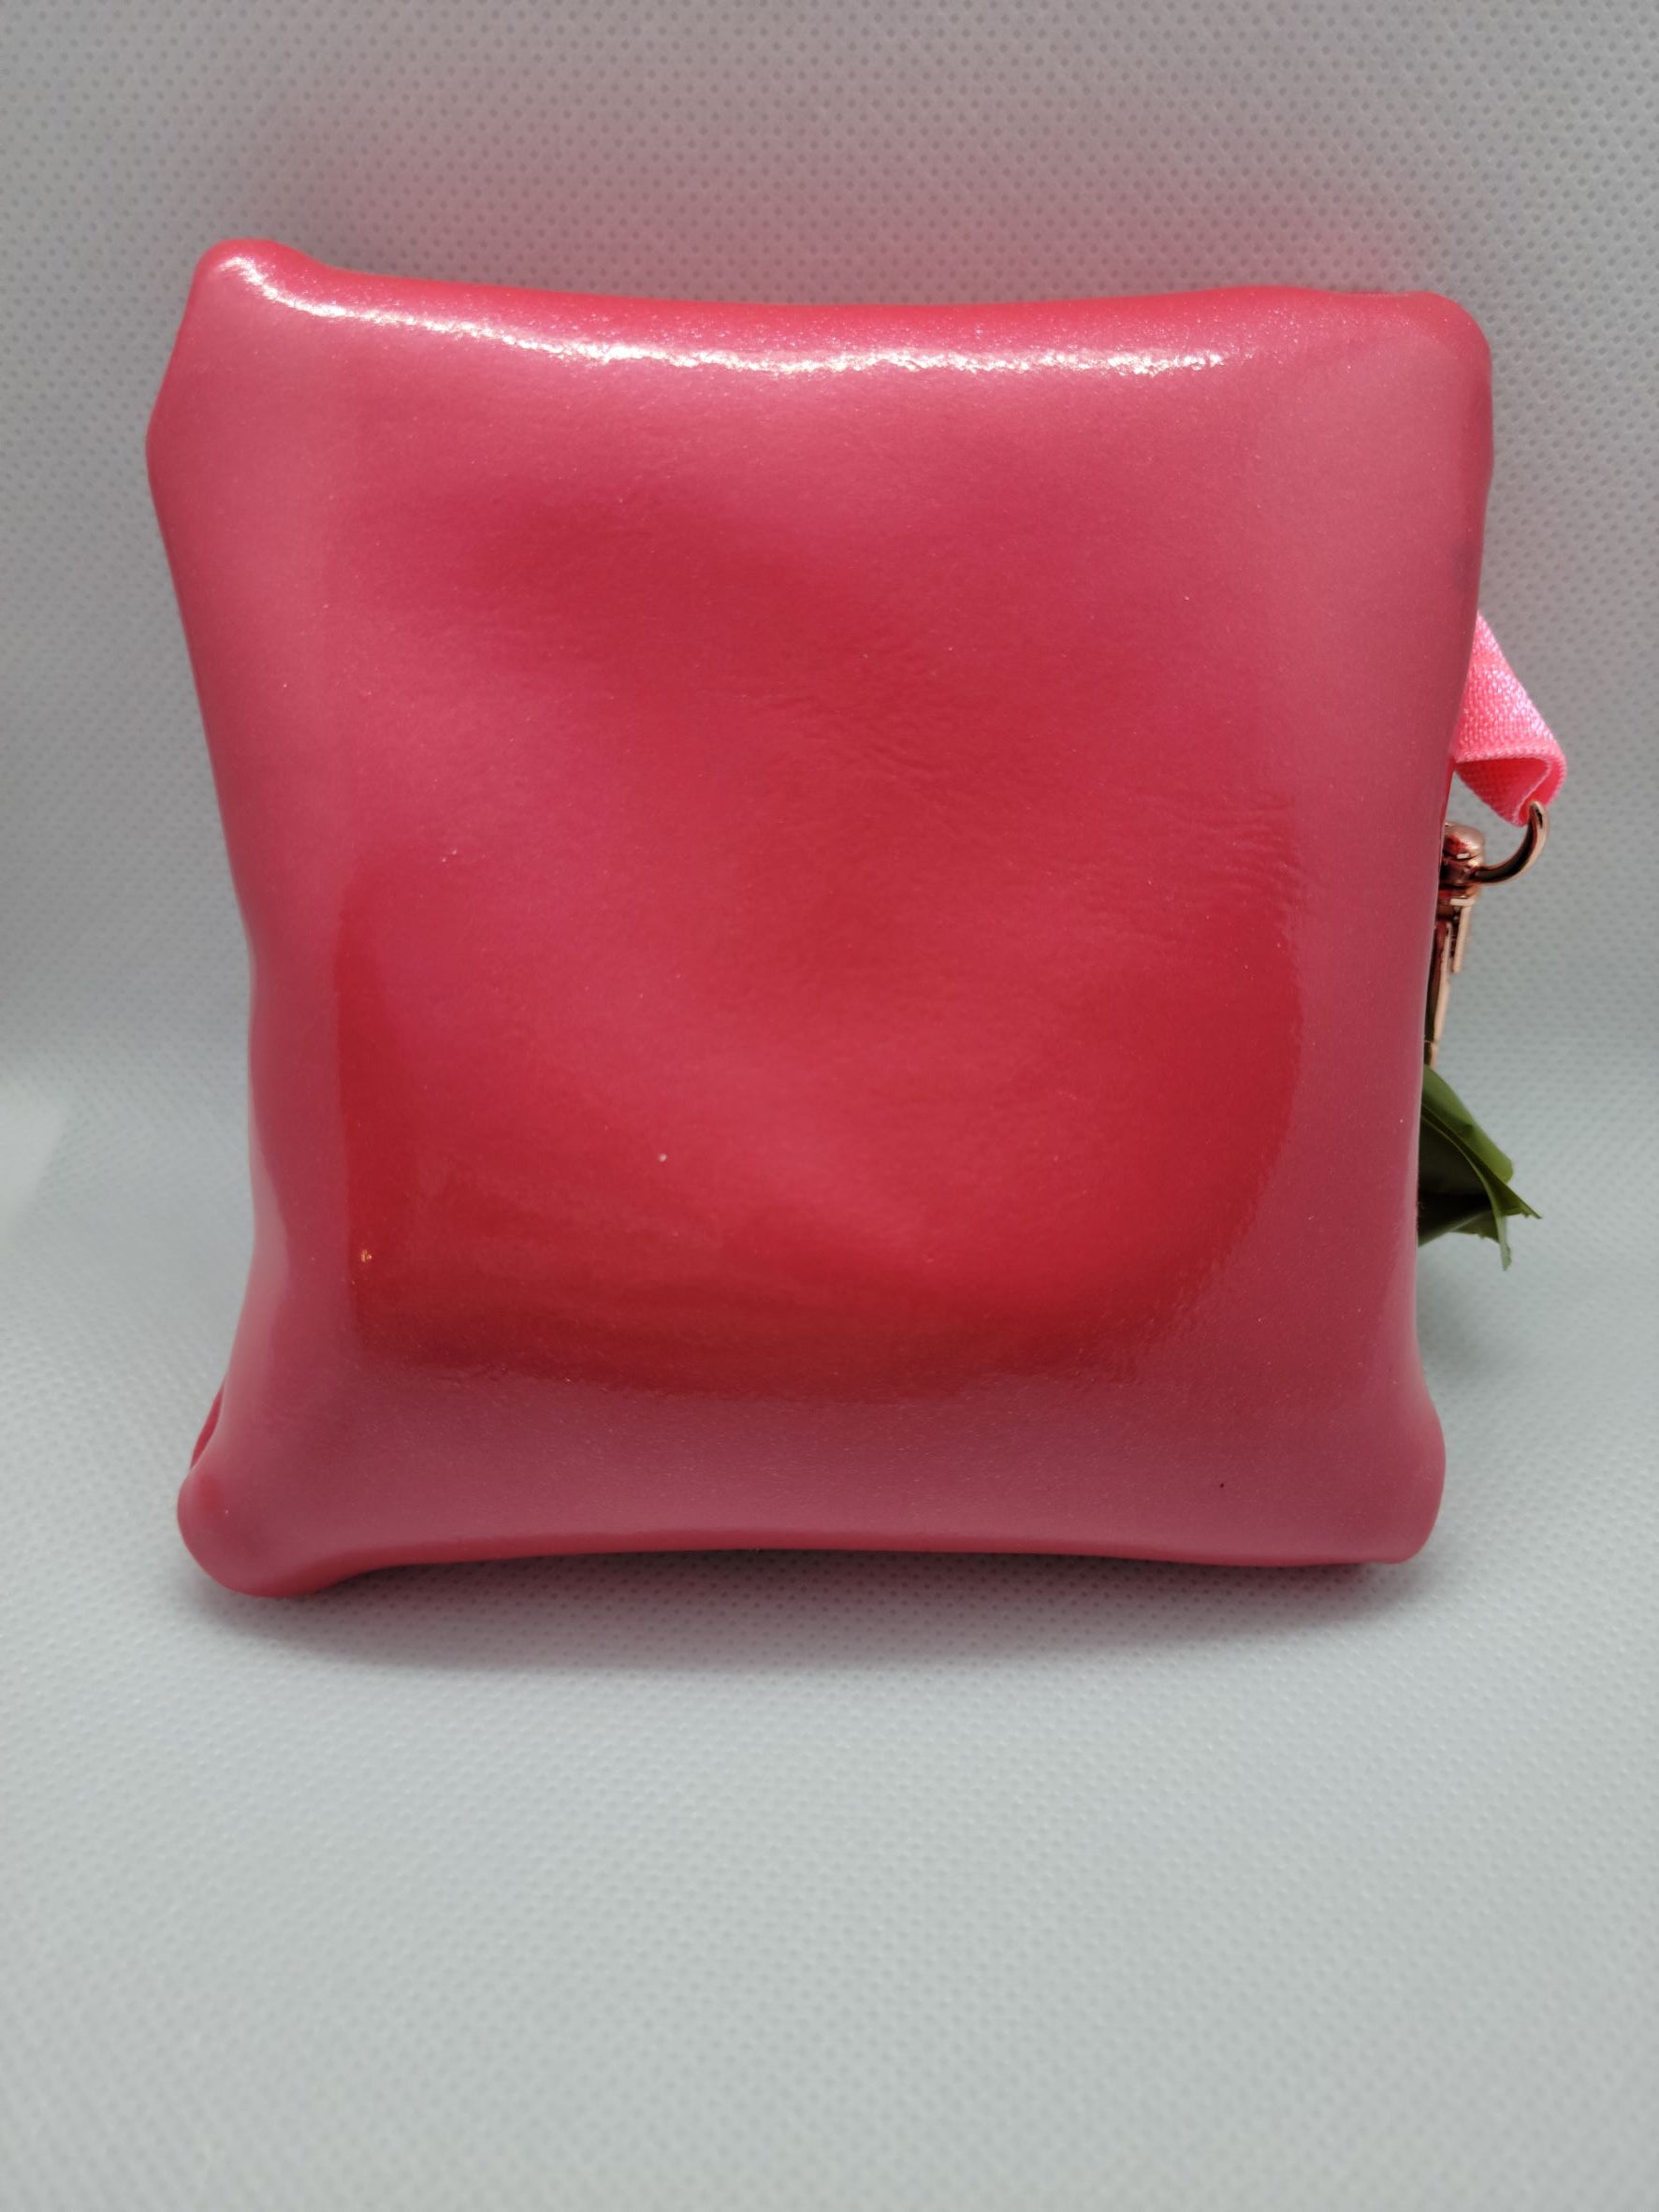 PINAKInet One Trip Grip Multipurpose Bag Holder Clip Soft Grip Shopping Bag  Easy Carrier Handle Pink - Price in India | Flipkart.com